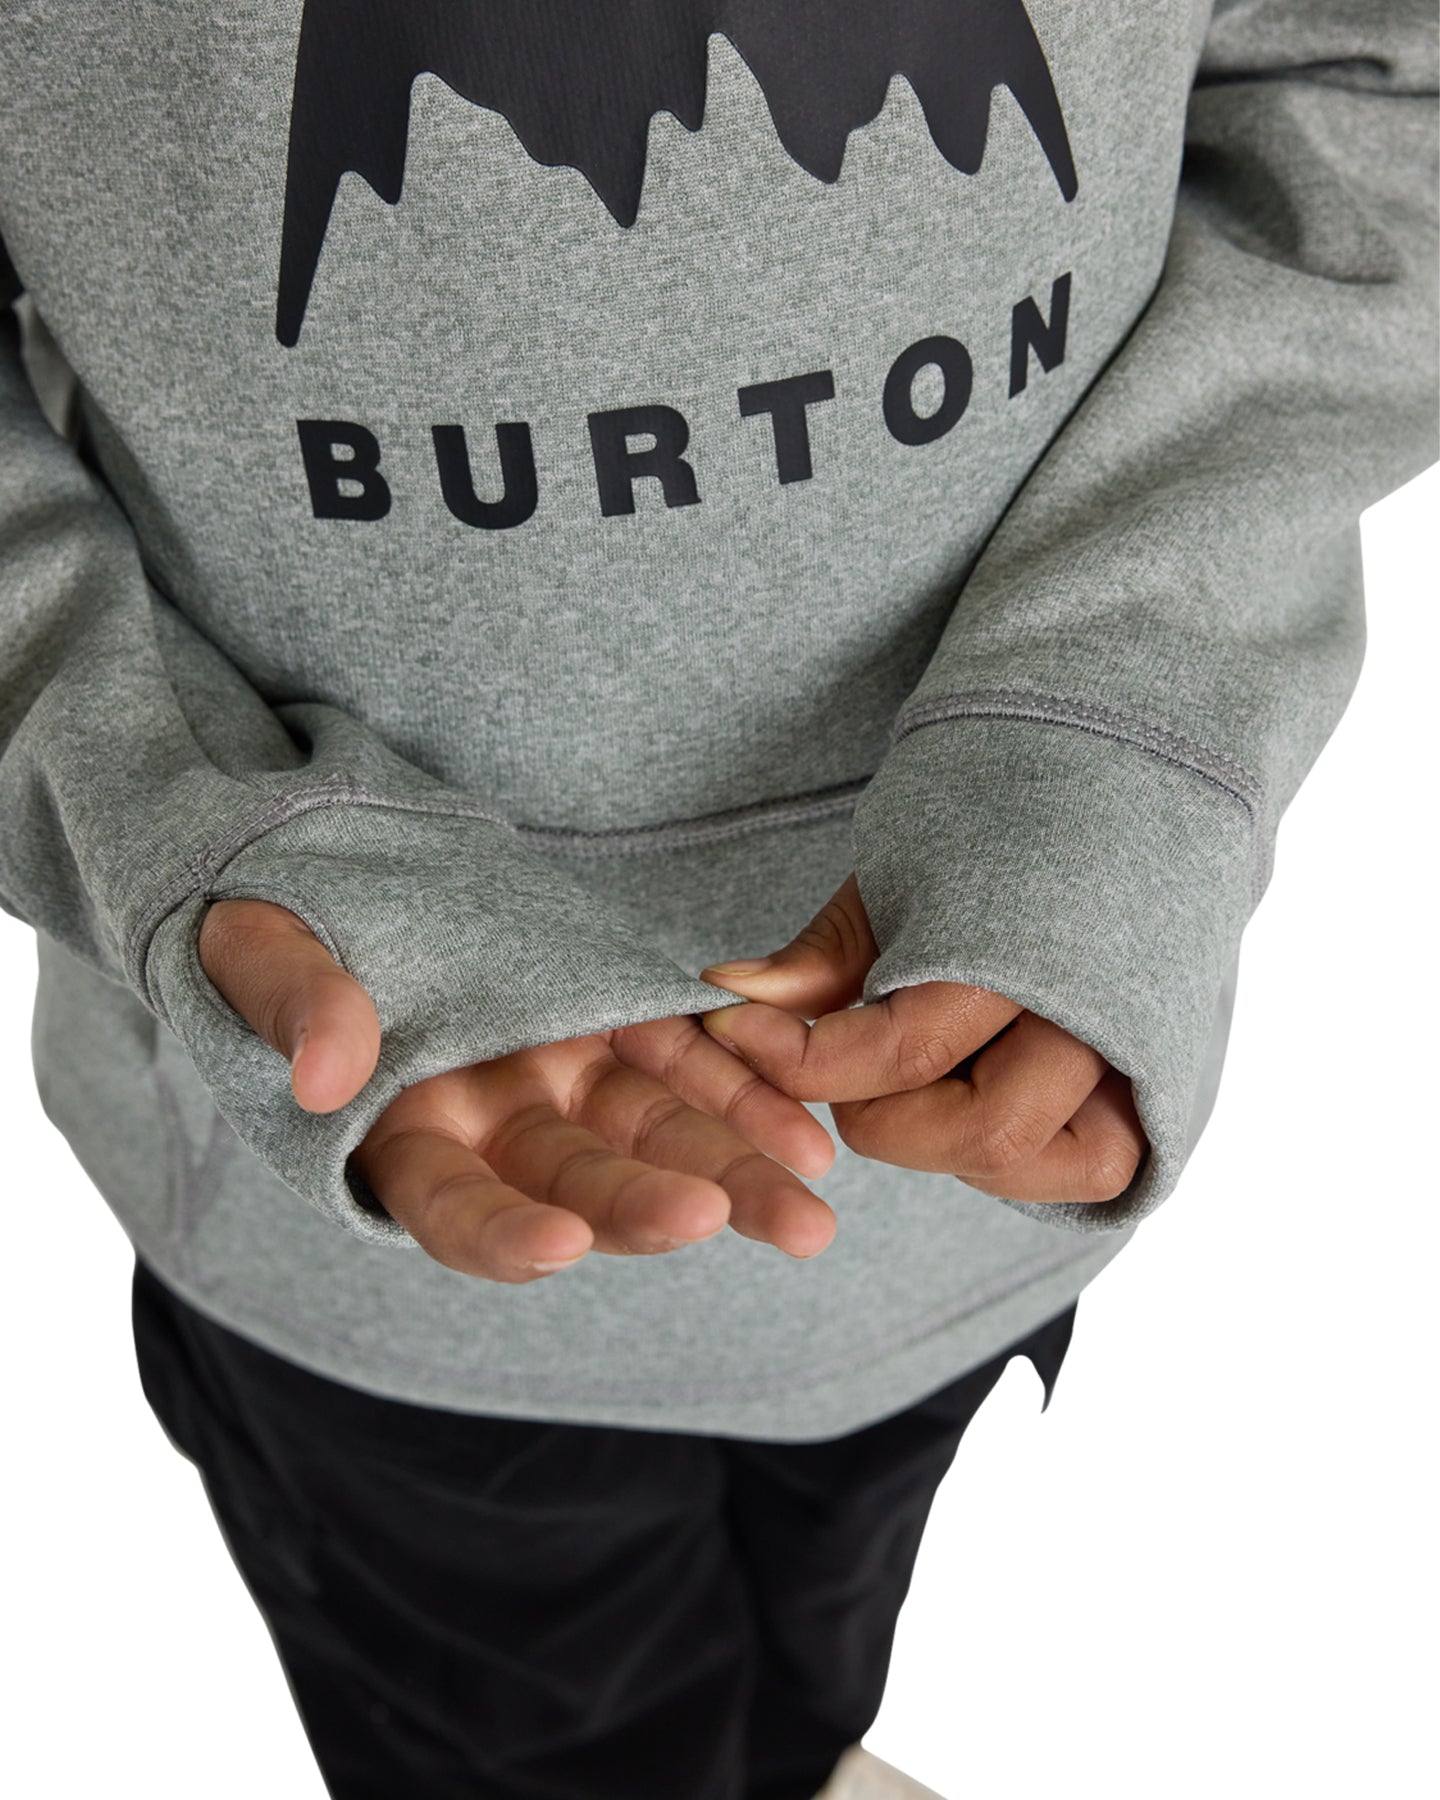 Burton Kids' Oak Pullover Hoodie - Gray Heather Hoodies & Sweatshirts - SnowSkiersWarehouse